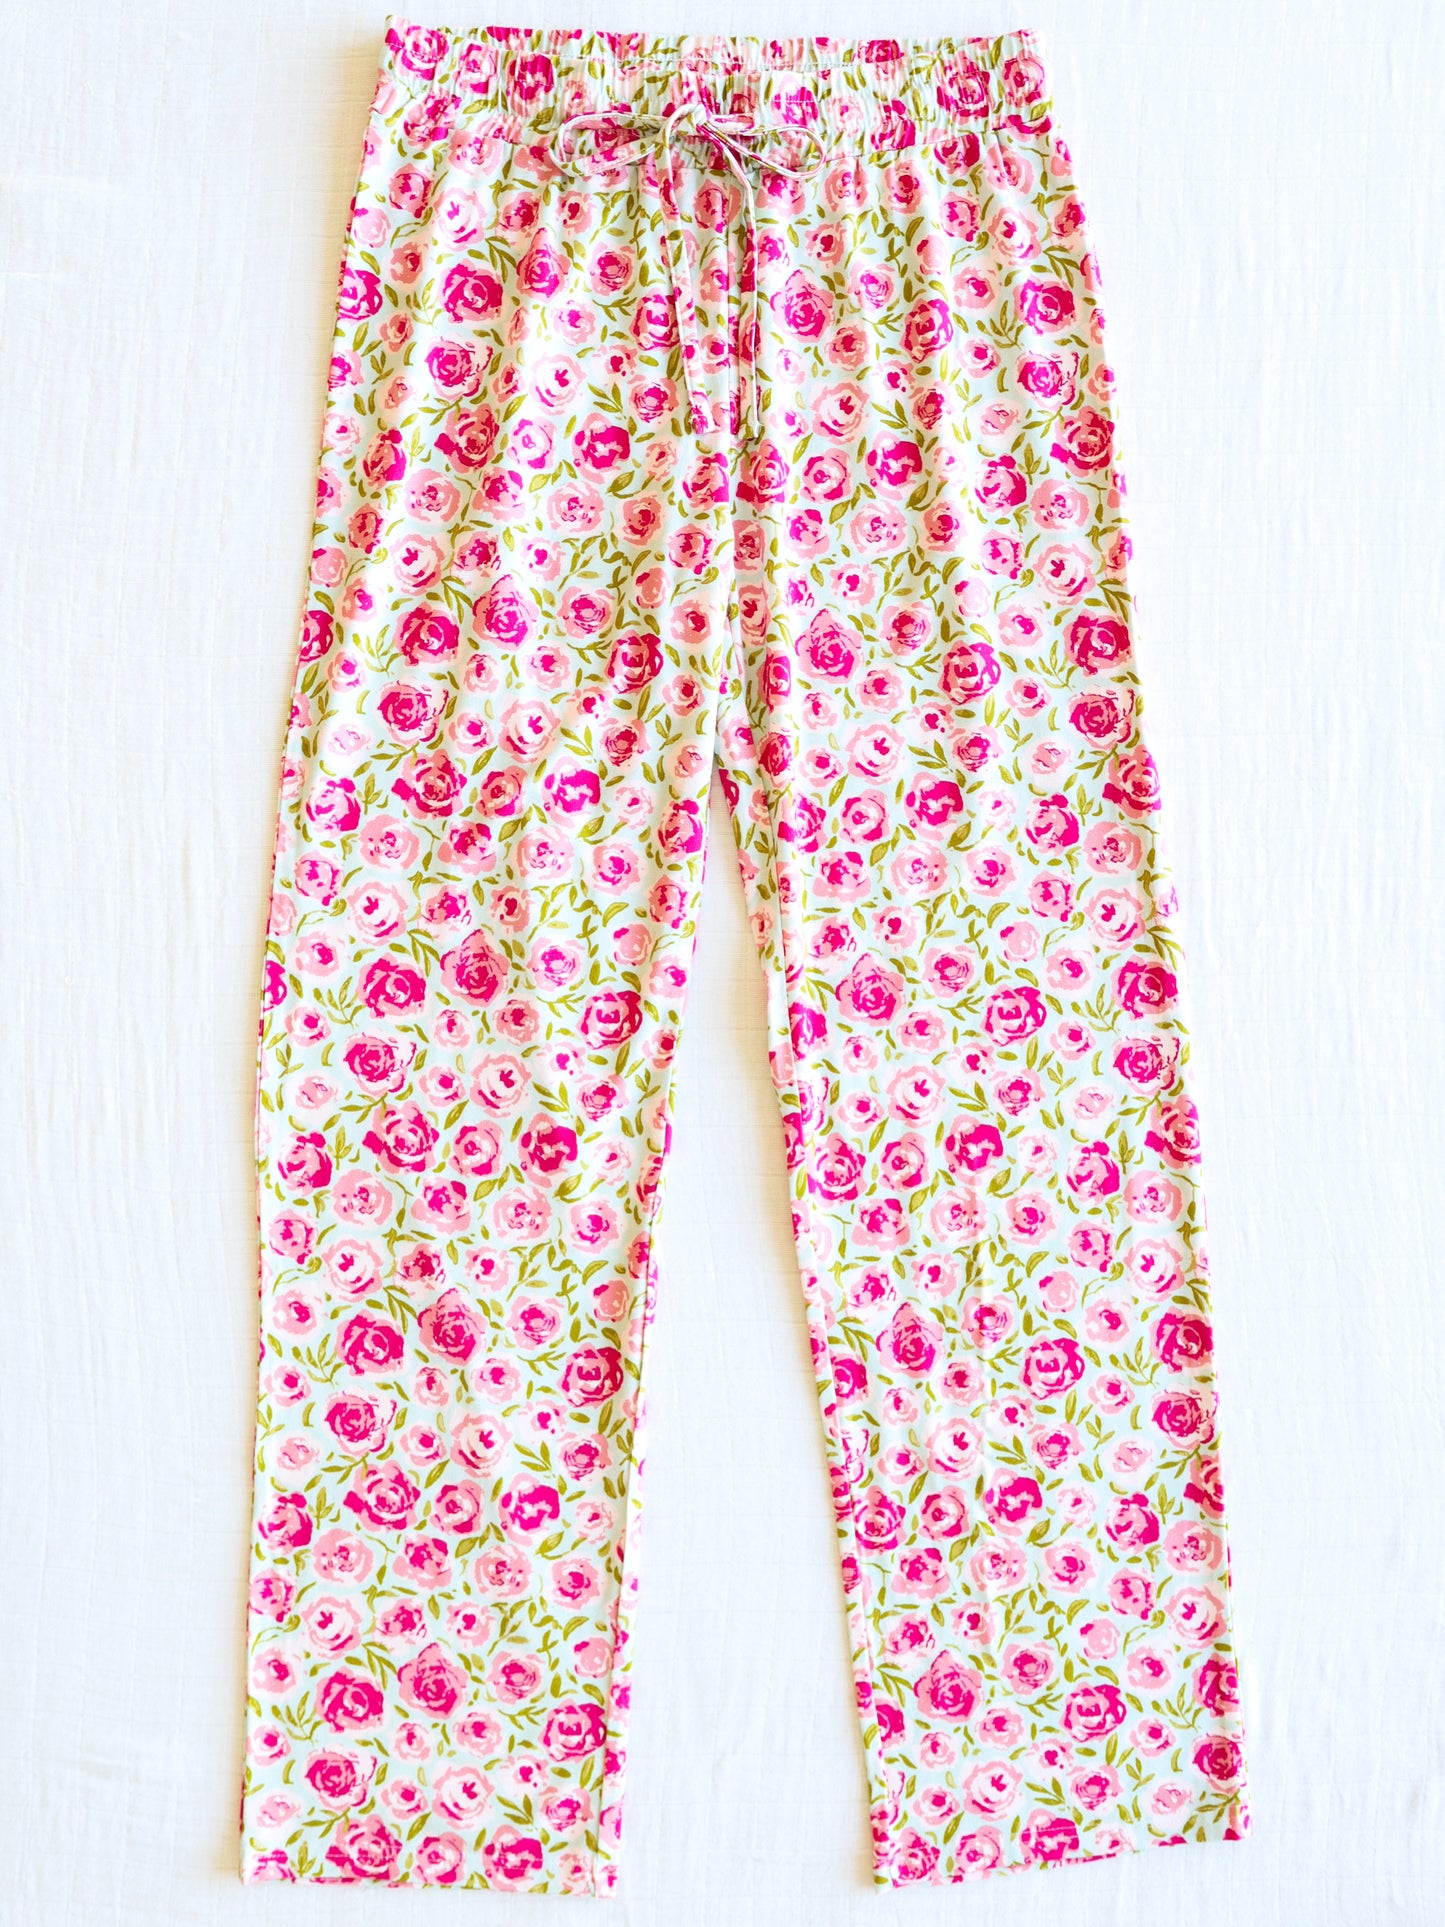 Women's Cloud Pajamas - Covered in Roses on Aqua